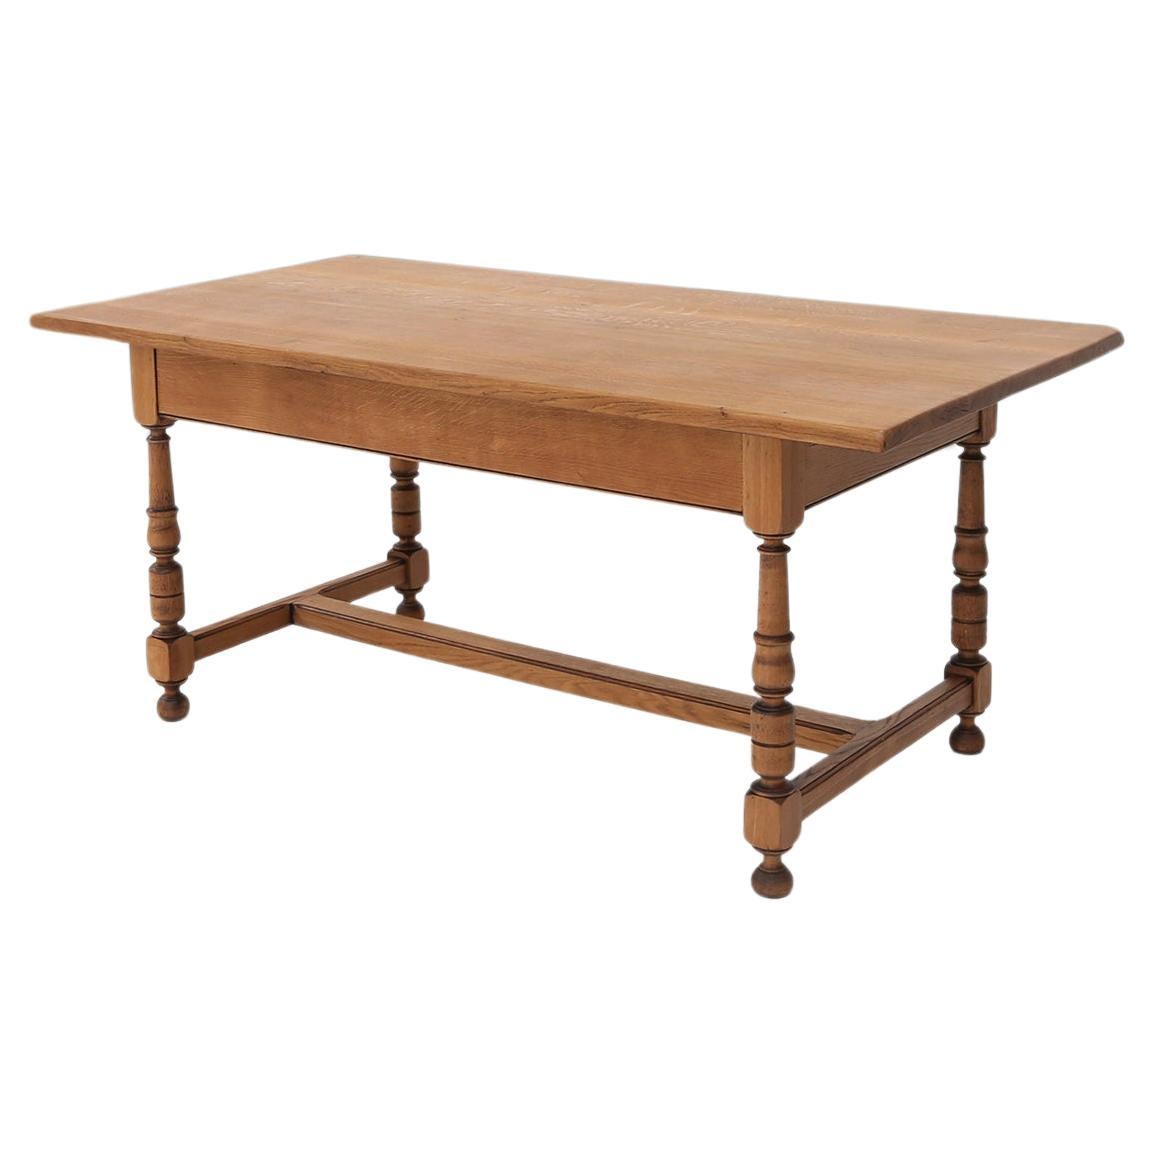 20th century Belgian oak dining table